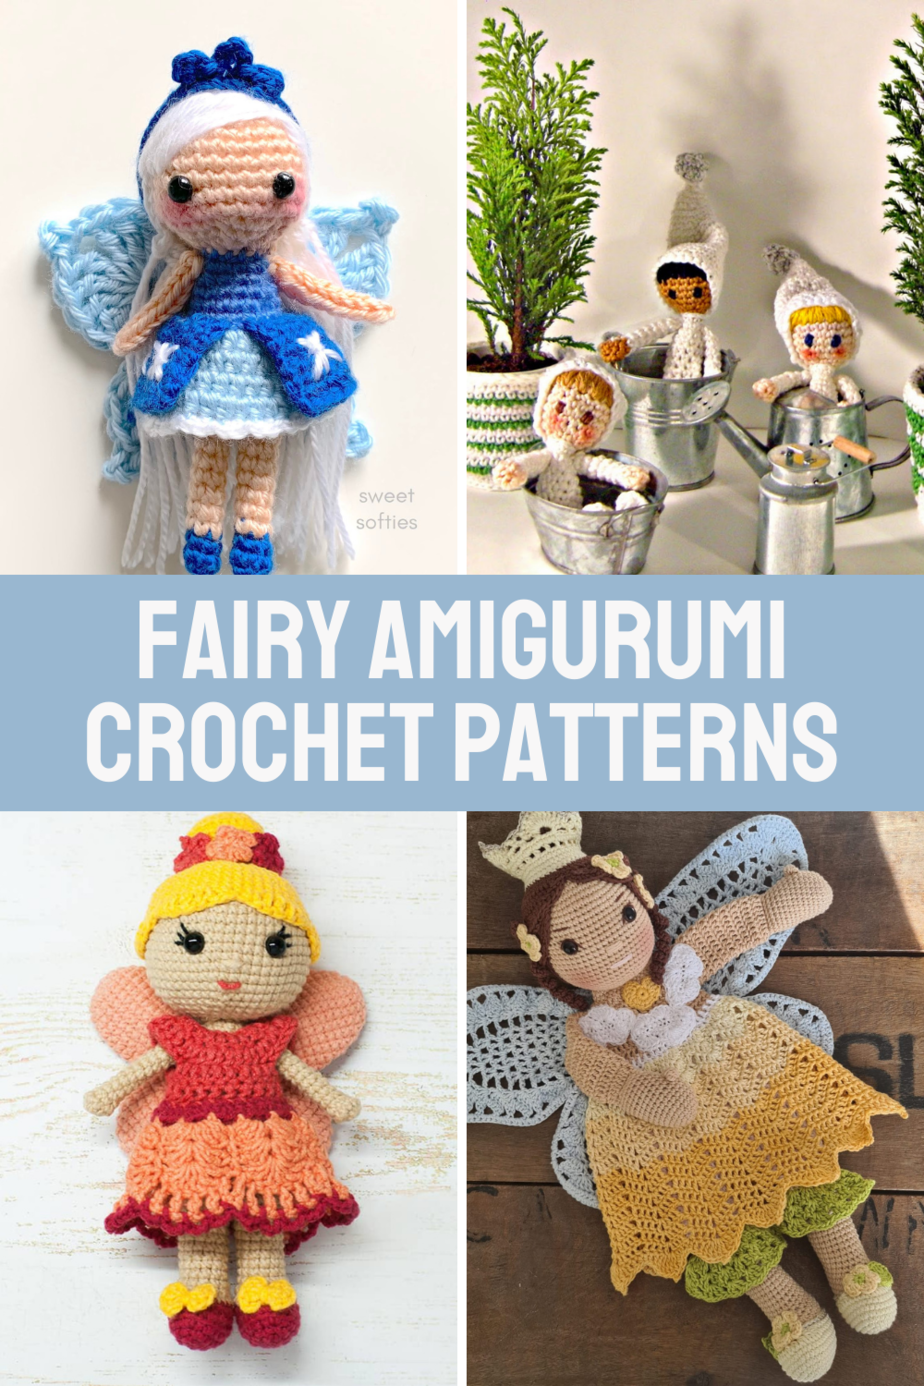 Free Crochet Patterns using Go For Faux Yarn - Sweet Softies